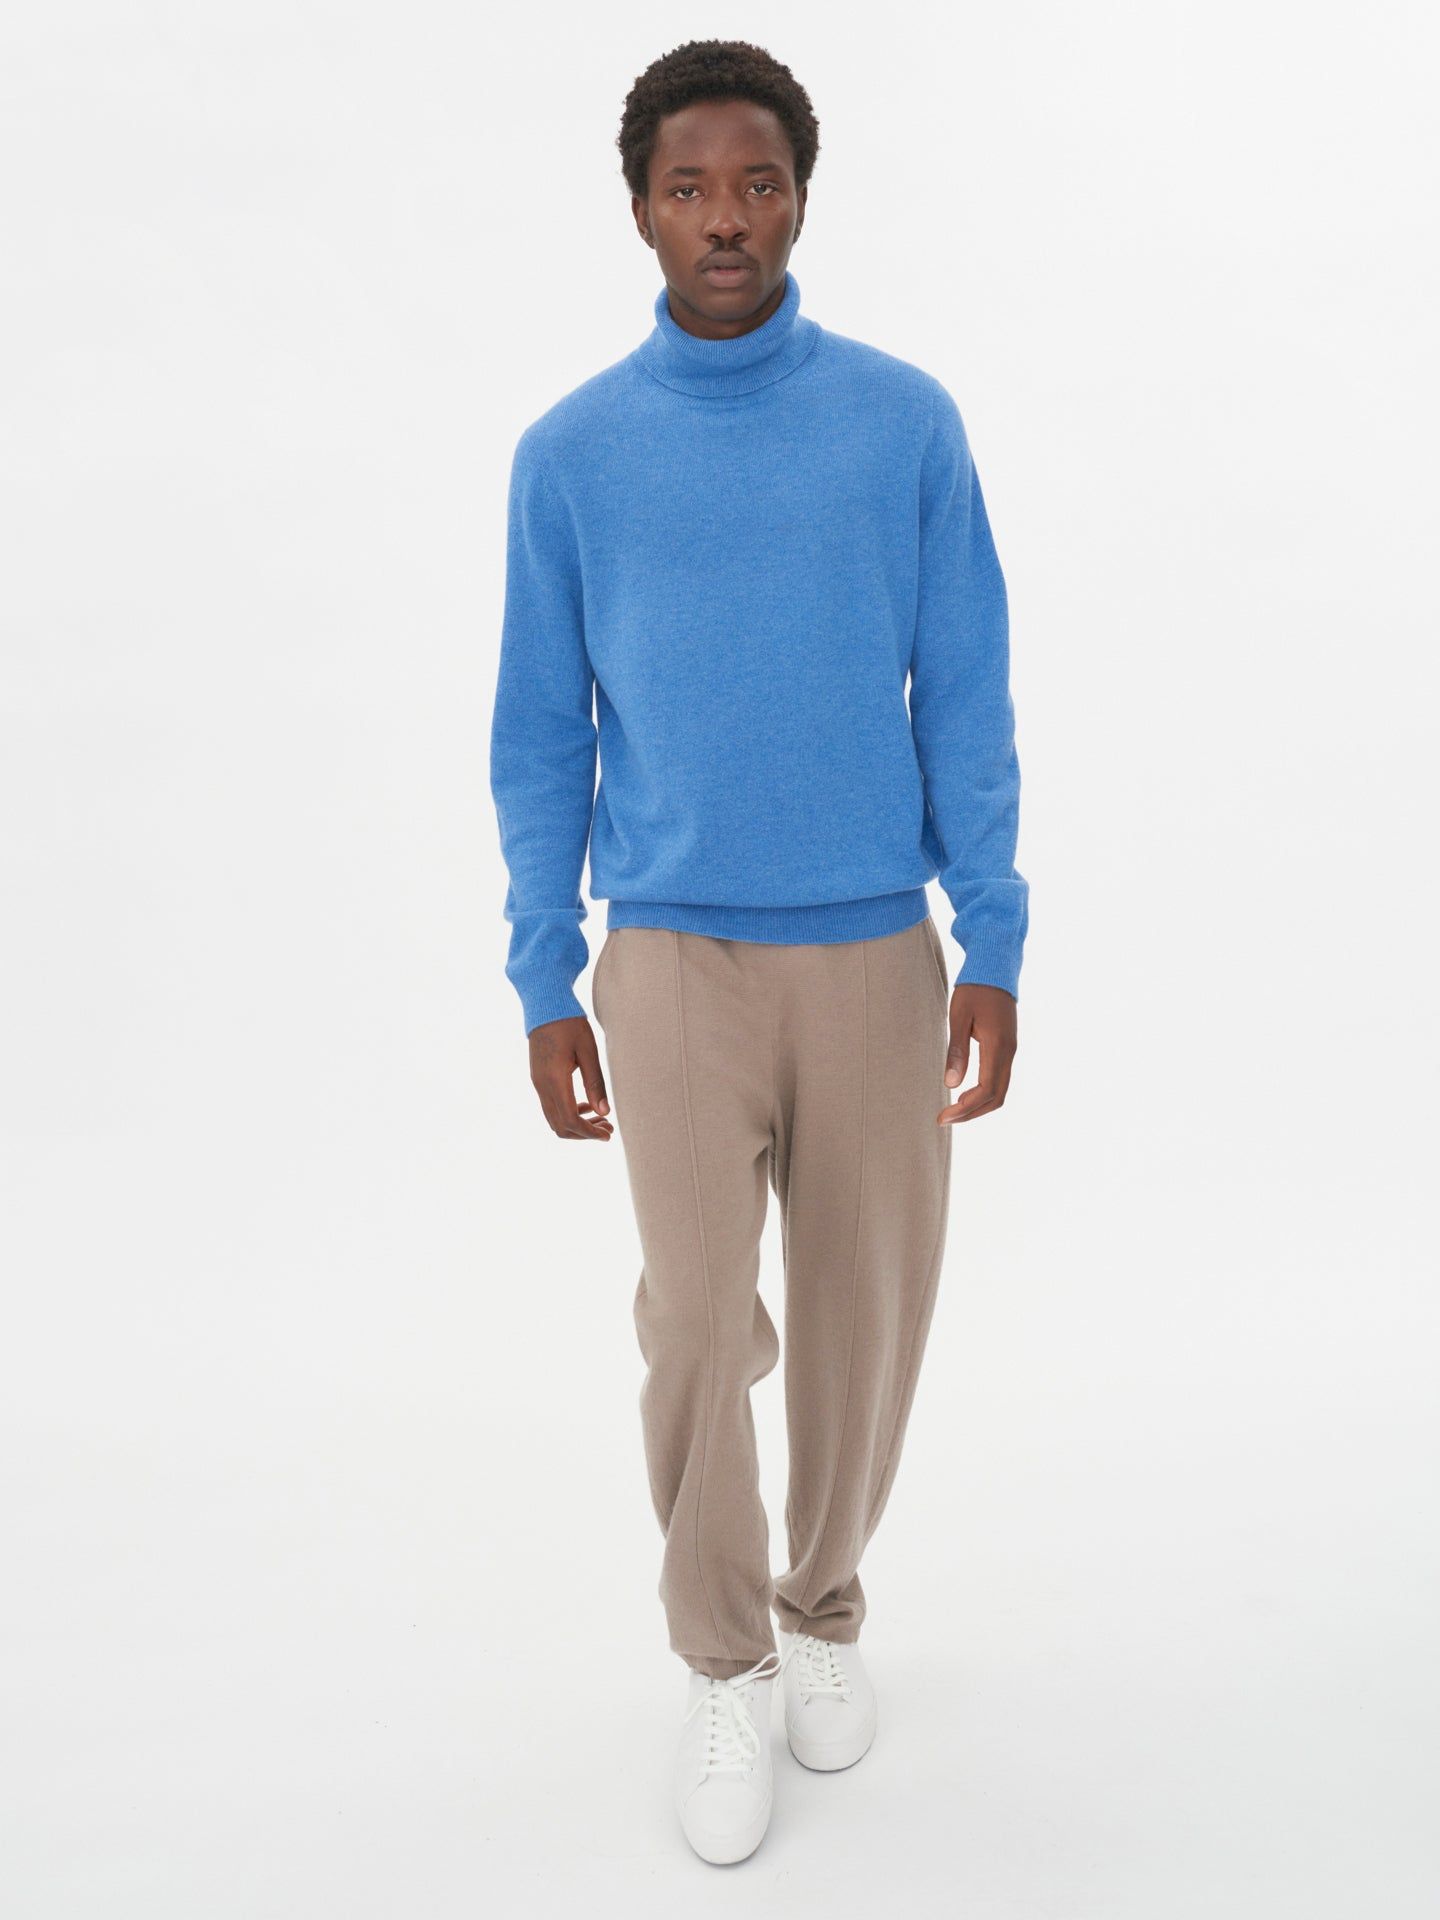 Men's Cashmere Turtle Neck Sweater Blue - Gobi Cashmere